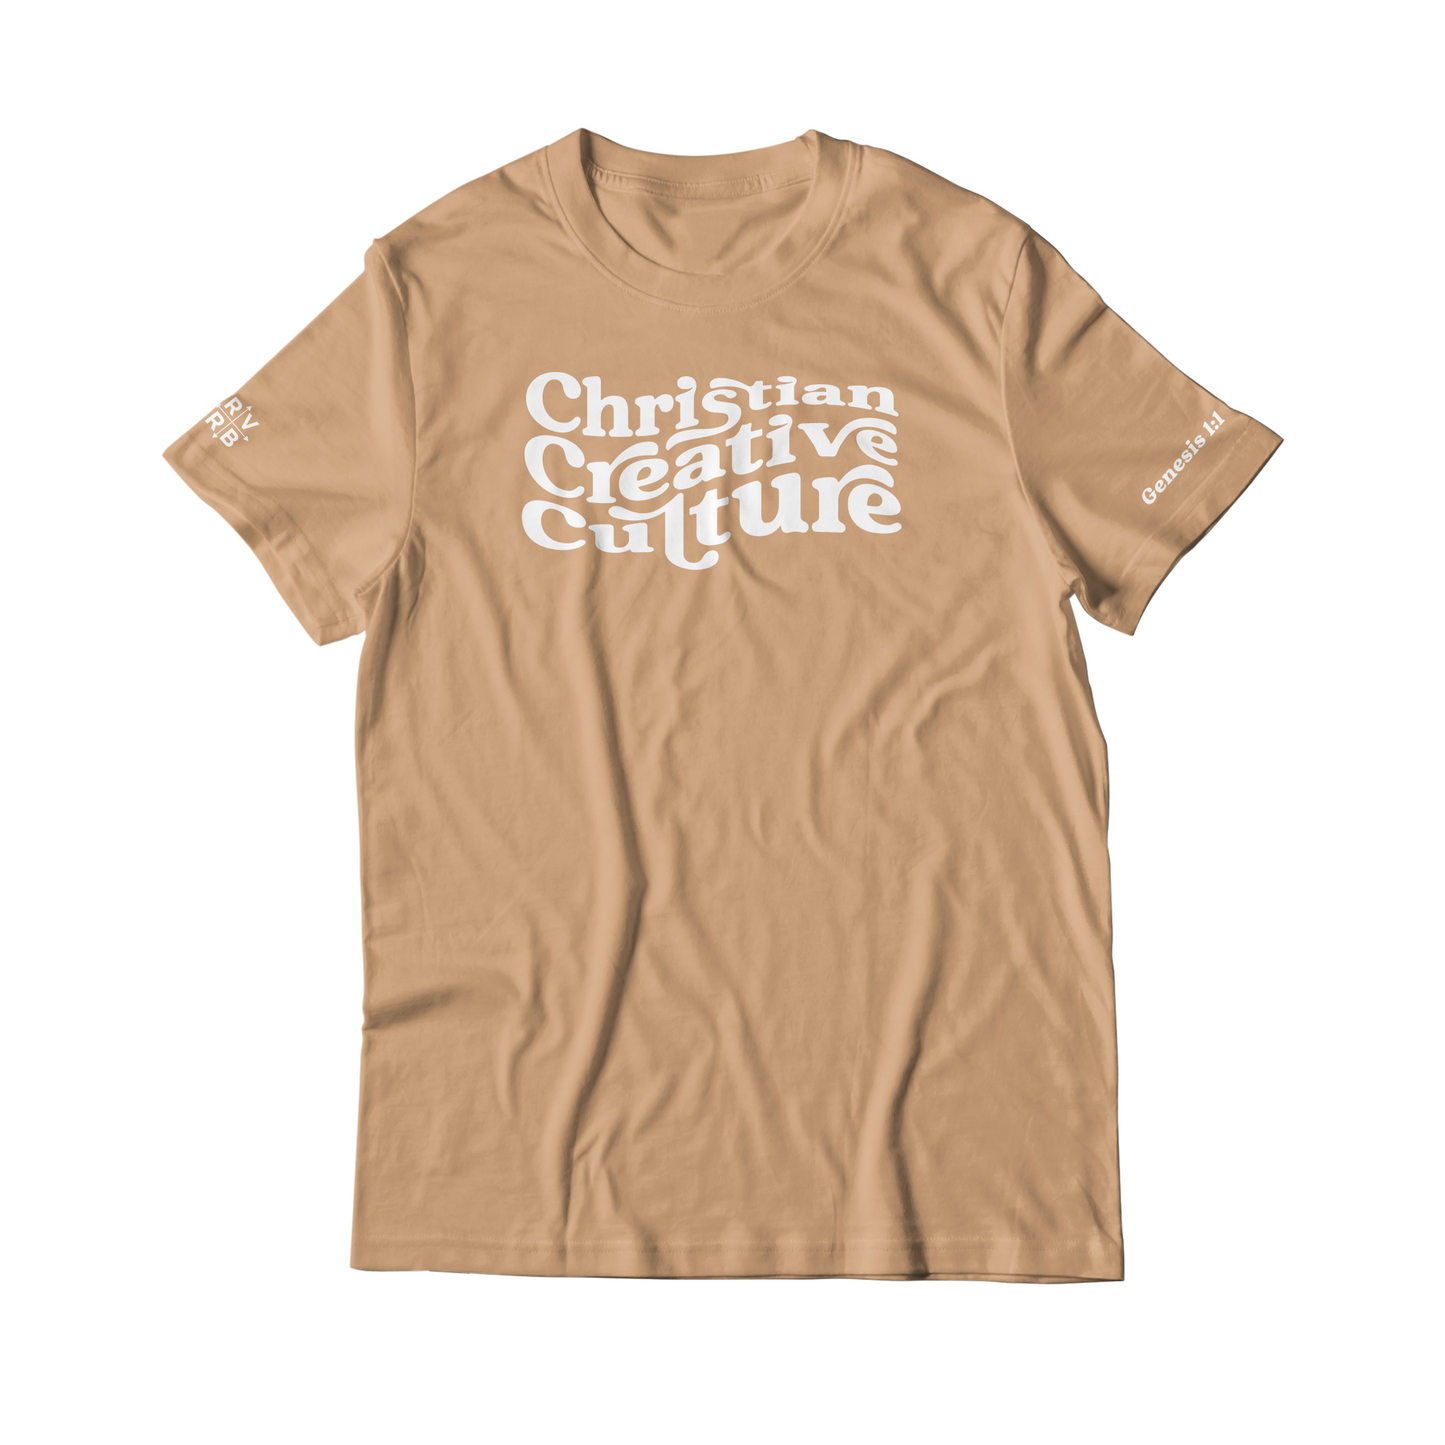 Christian Creative Culture T-Shirt